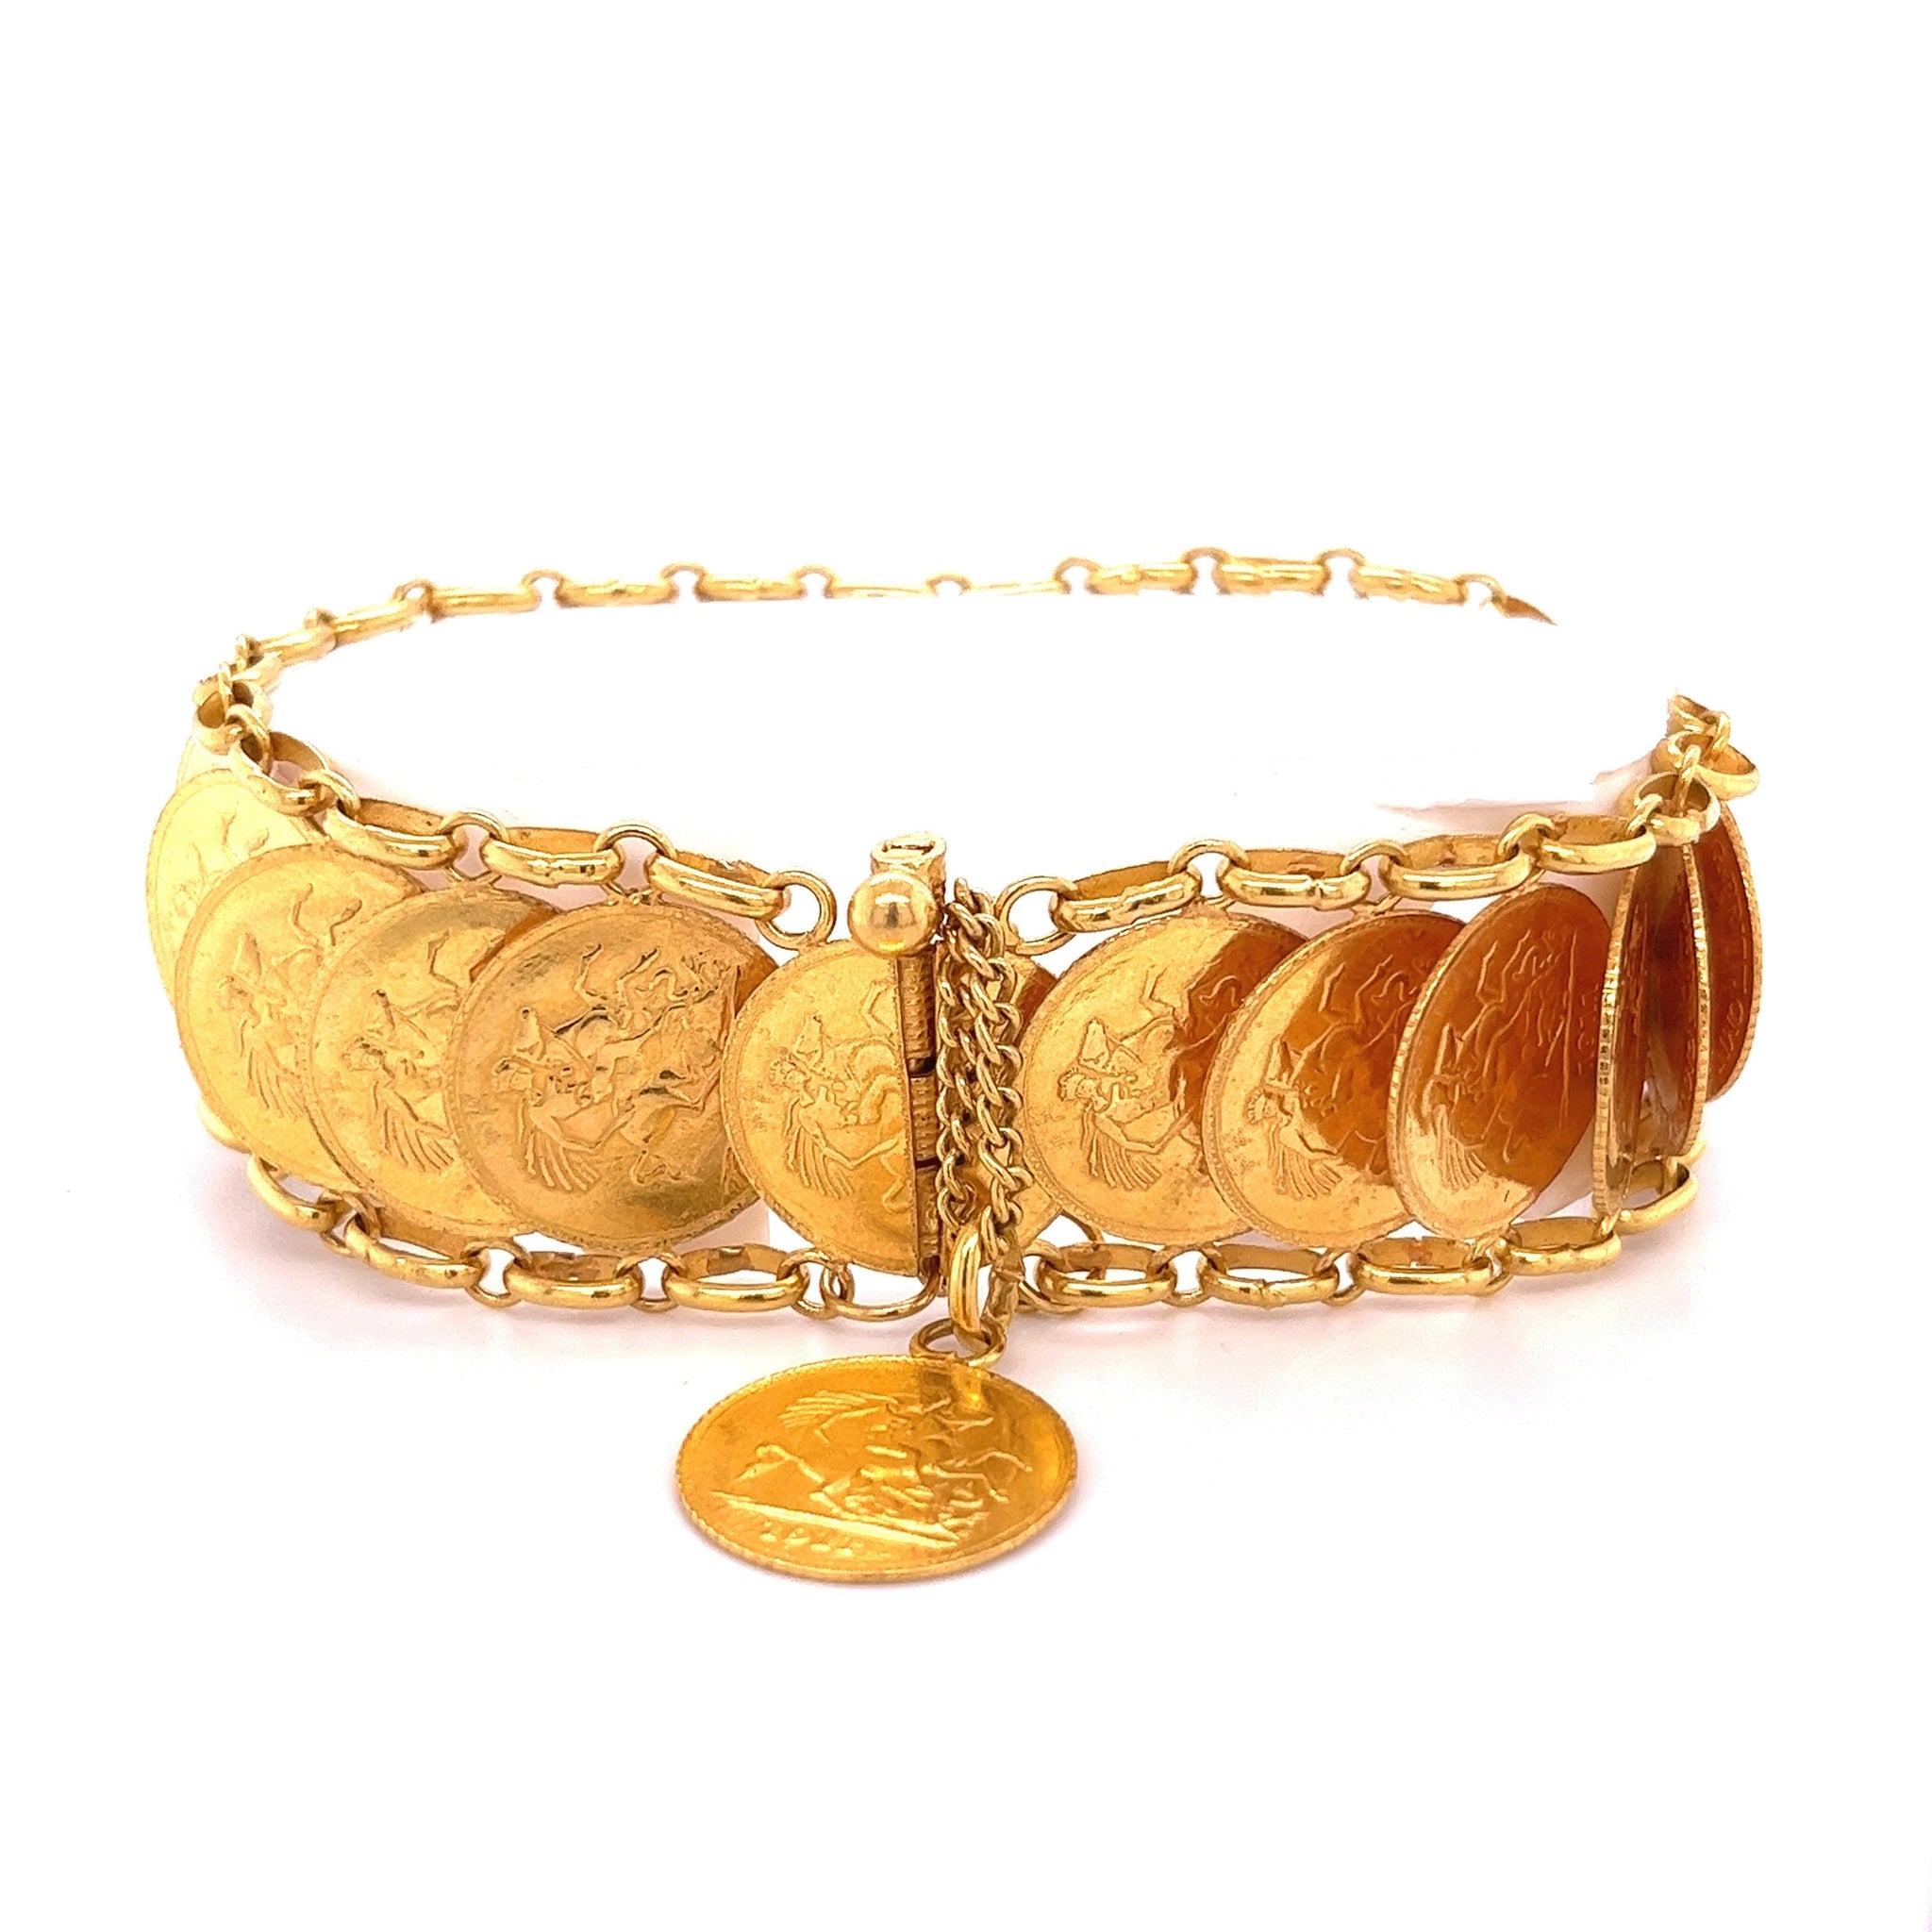 Mango Design 1 Gram Gold Bracelet For Womens Collections BRAC429 | Gold  bracelet, Real gold jewelry, Gold